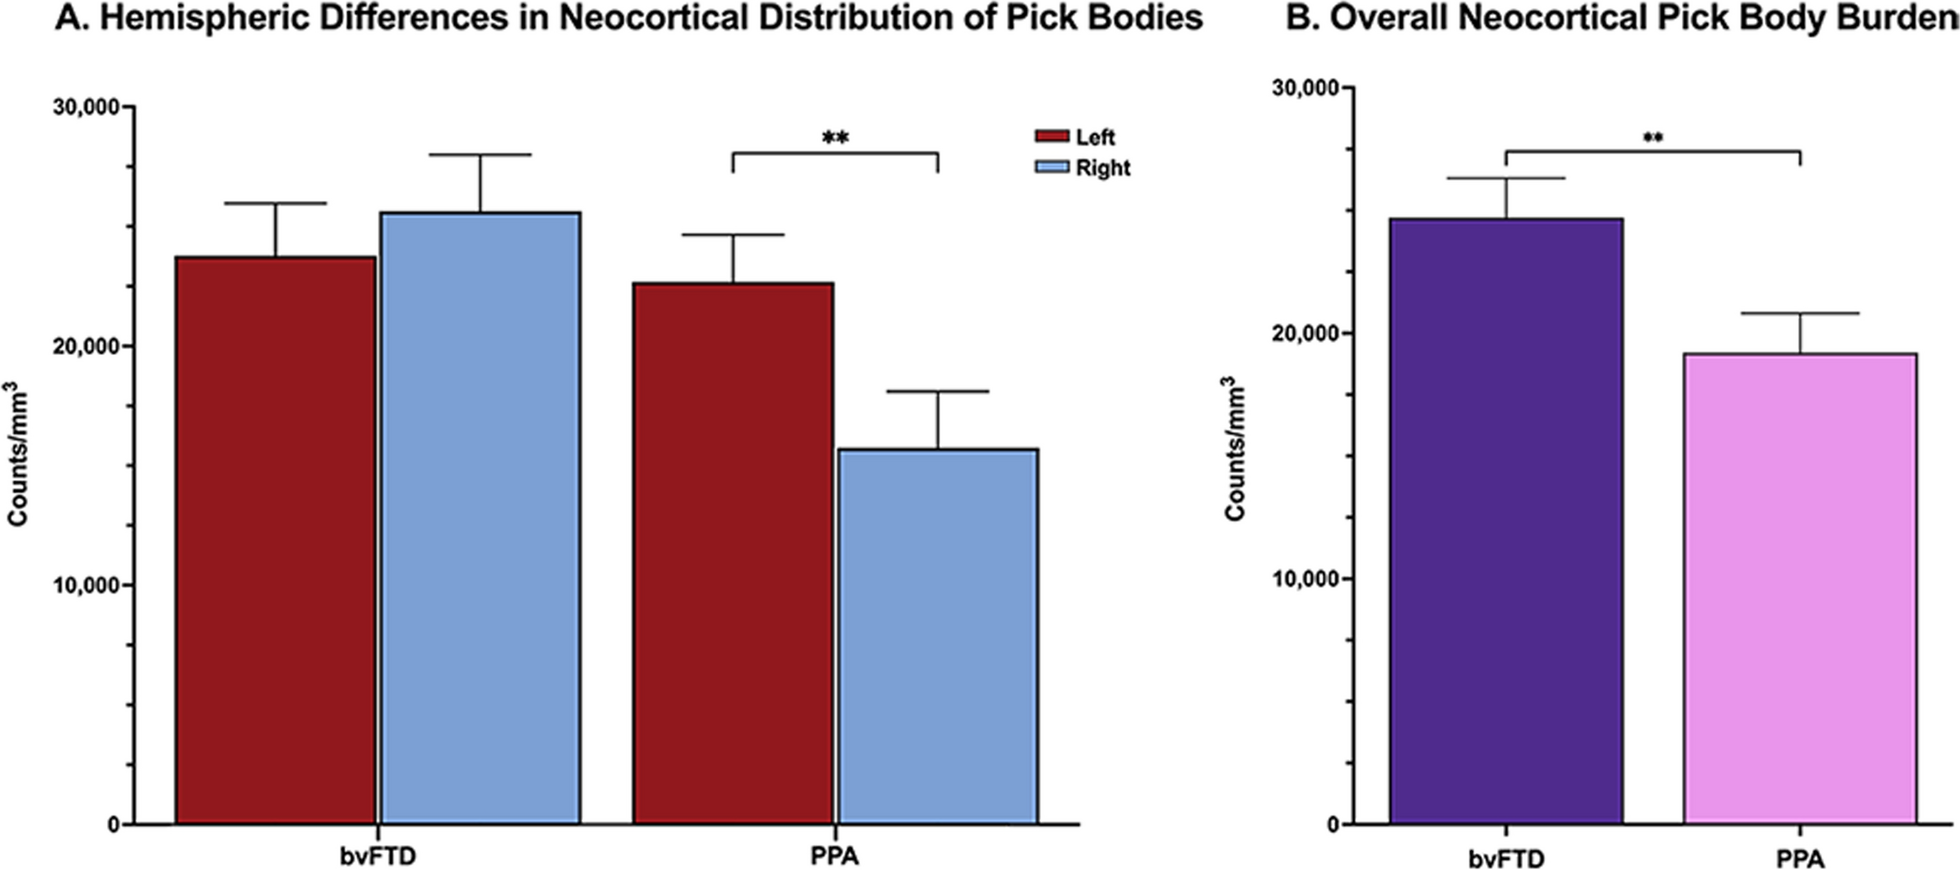 Phenotypically concordant distribution of pick bodies in aphasic versus behavioral dementias